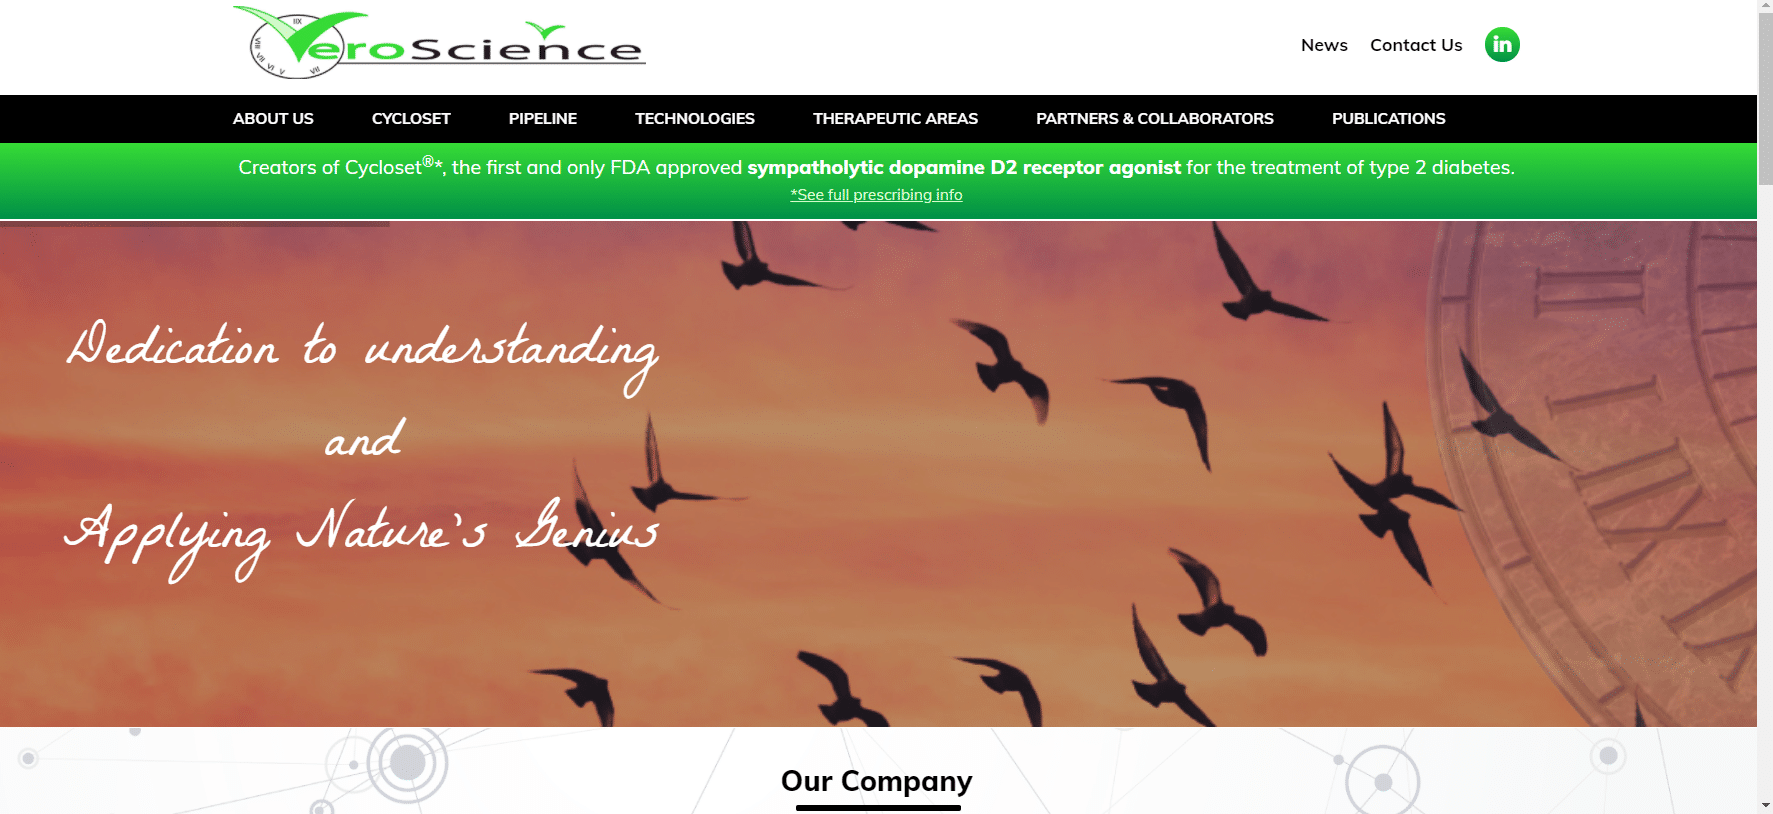 VeroScience Biotechnology Company Website